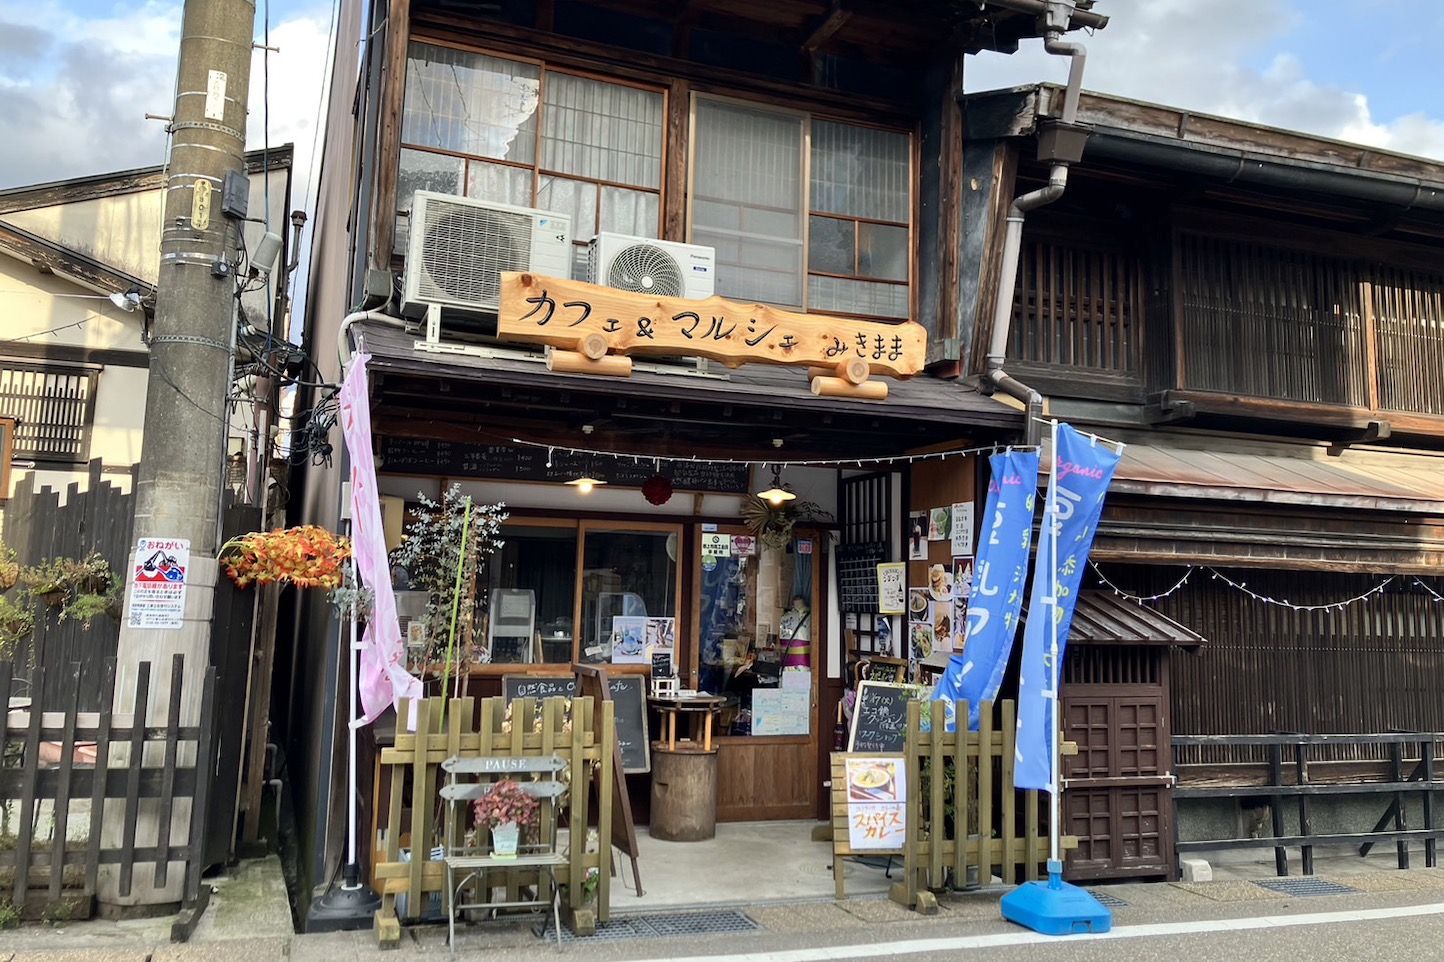 Cafe&marche mi kimama スライダー画像1